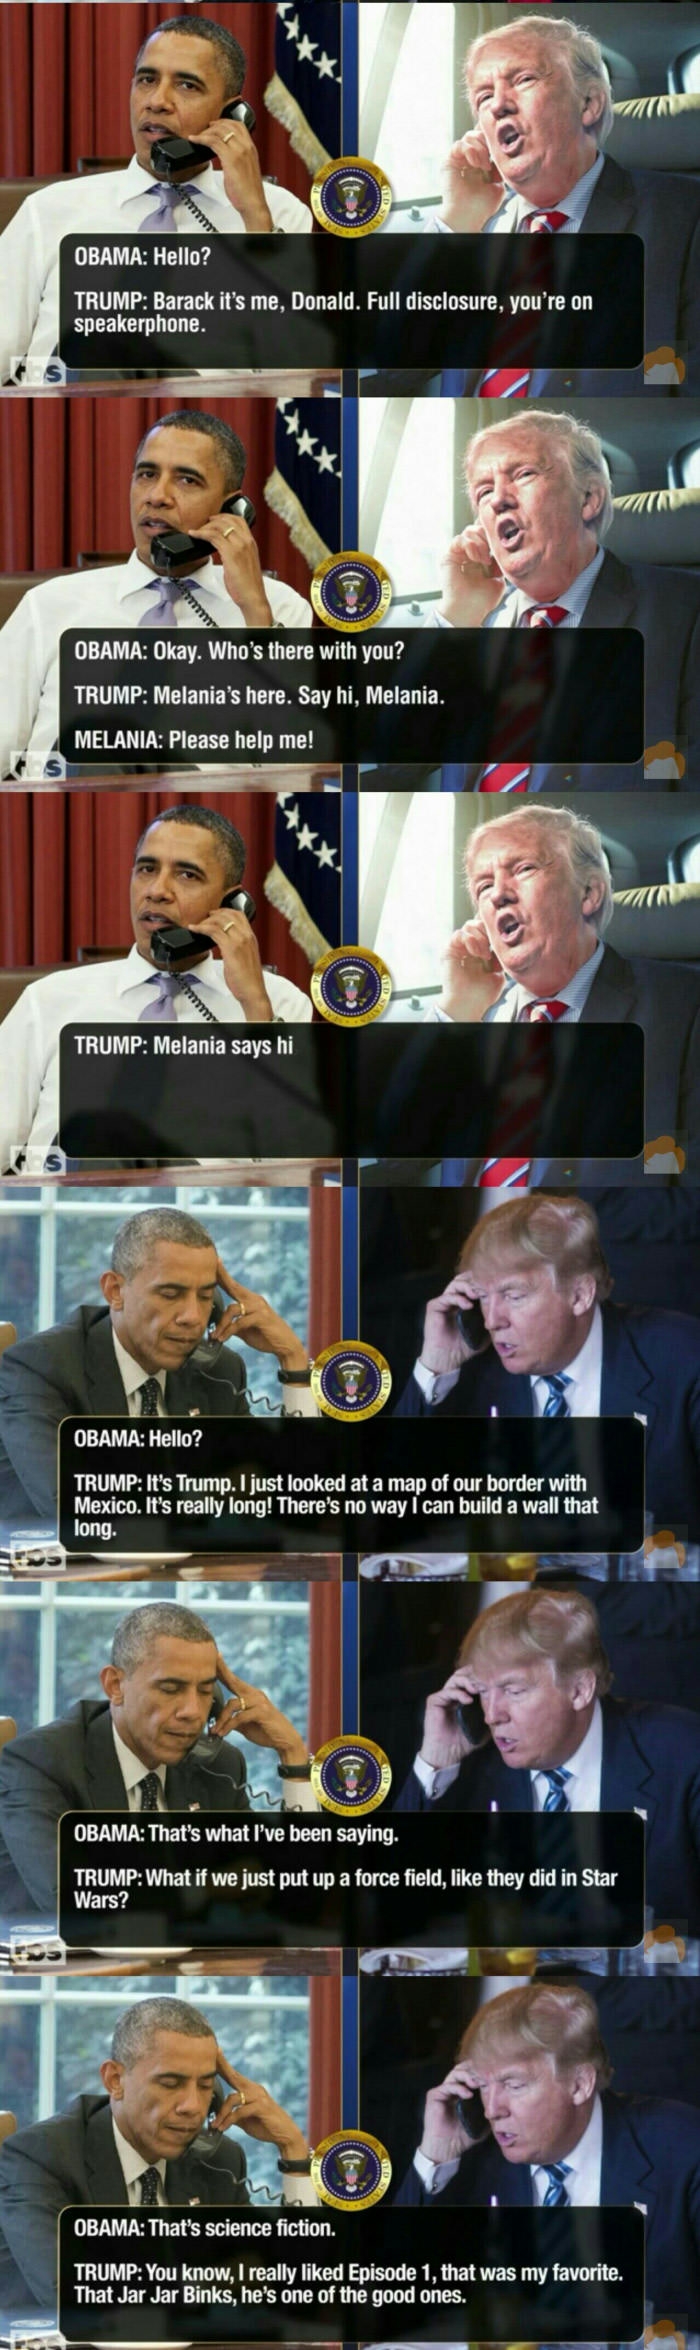 Leaked transcripts of Trump & Obama pt.2